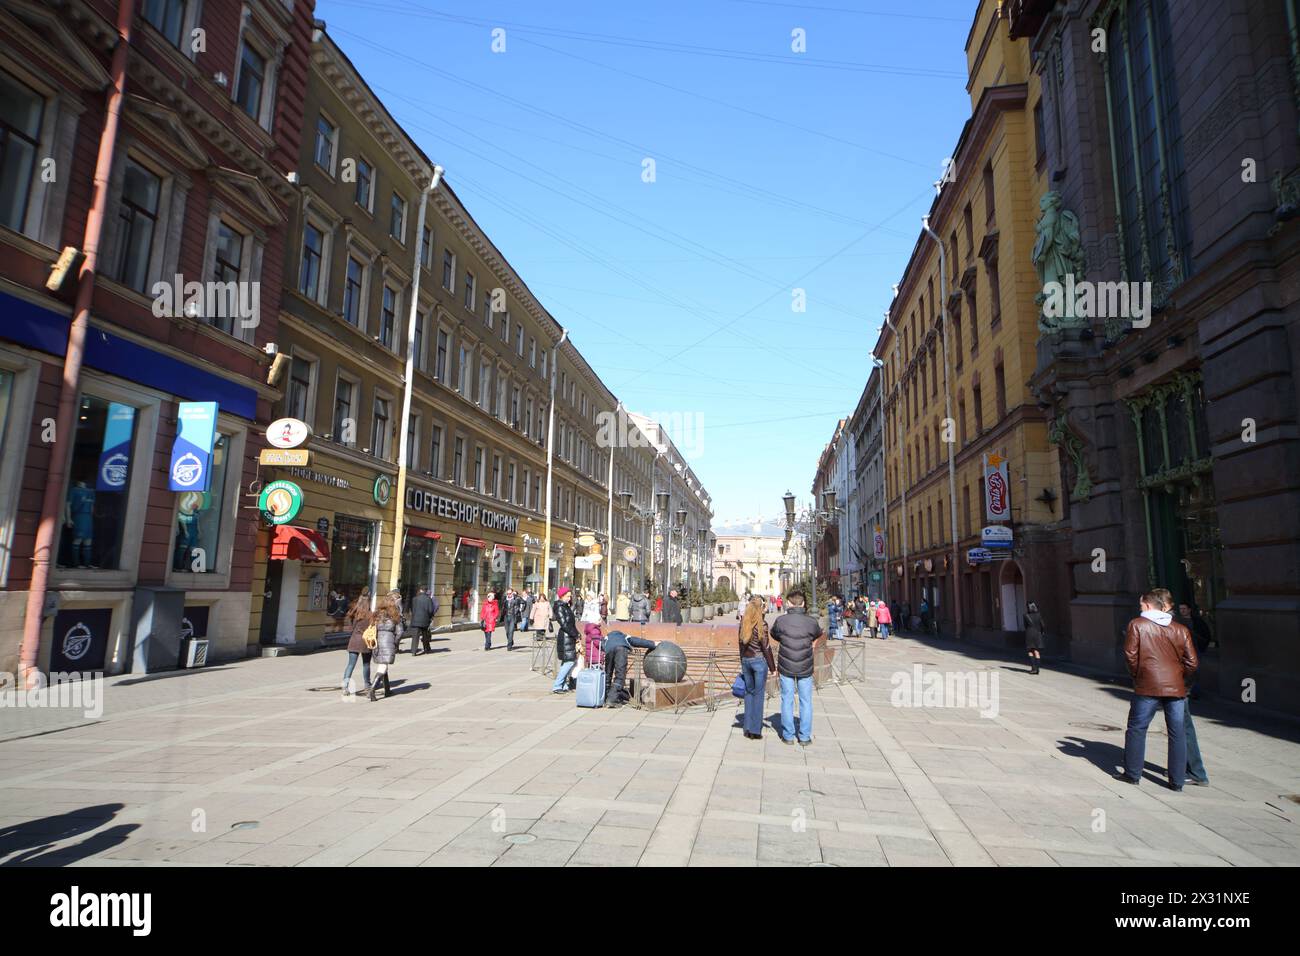 SAINT-PÉTERSBOURG - APR 6 : les gens marchent dans la rue Malaya Sadovaya, 6 avril 2013, St.Petersburg, Russie. Malaya Sadovaya - rue piétonne dans le Banque D'Images